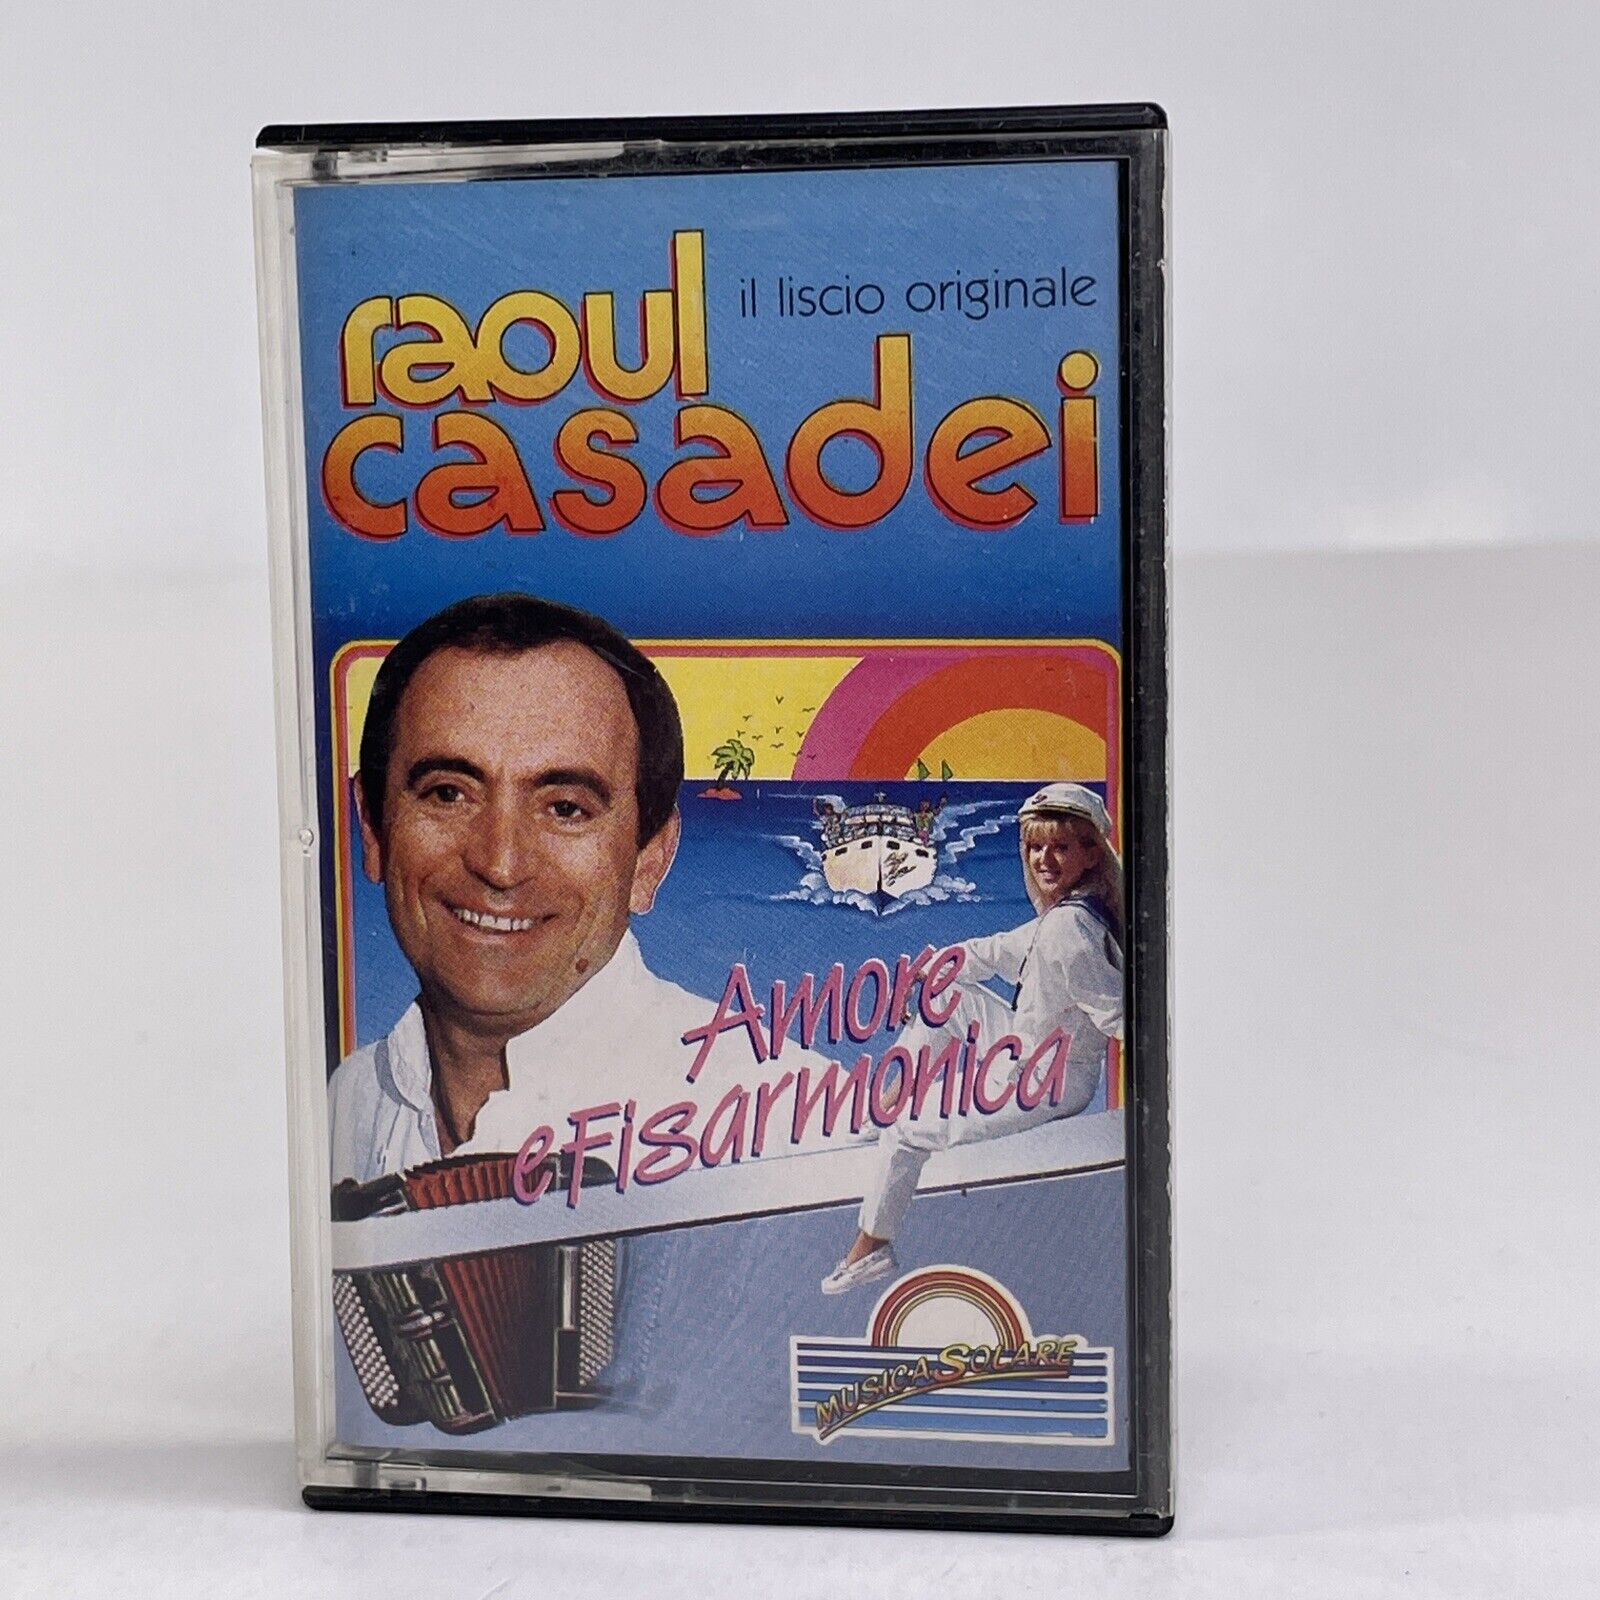 Italy Import: Raoul Casadei, Il Liscio Originale (Audio Cassette Tape, 1982)